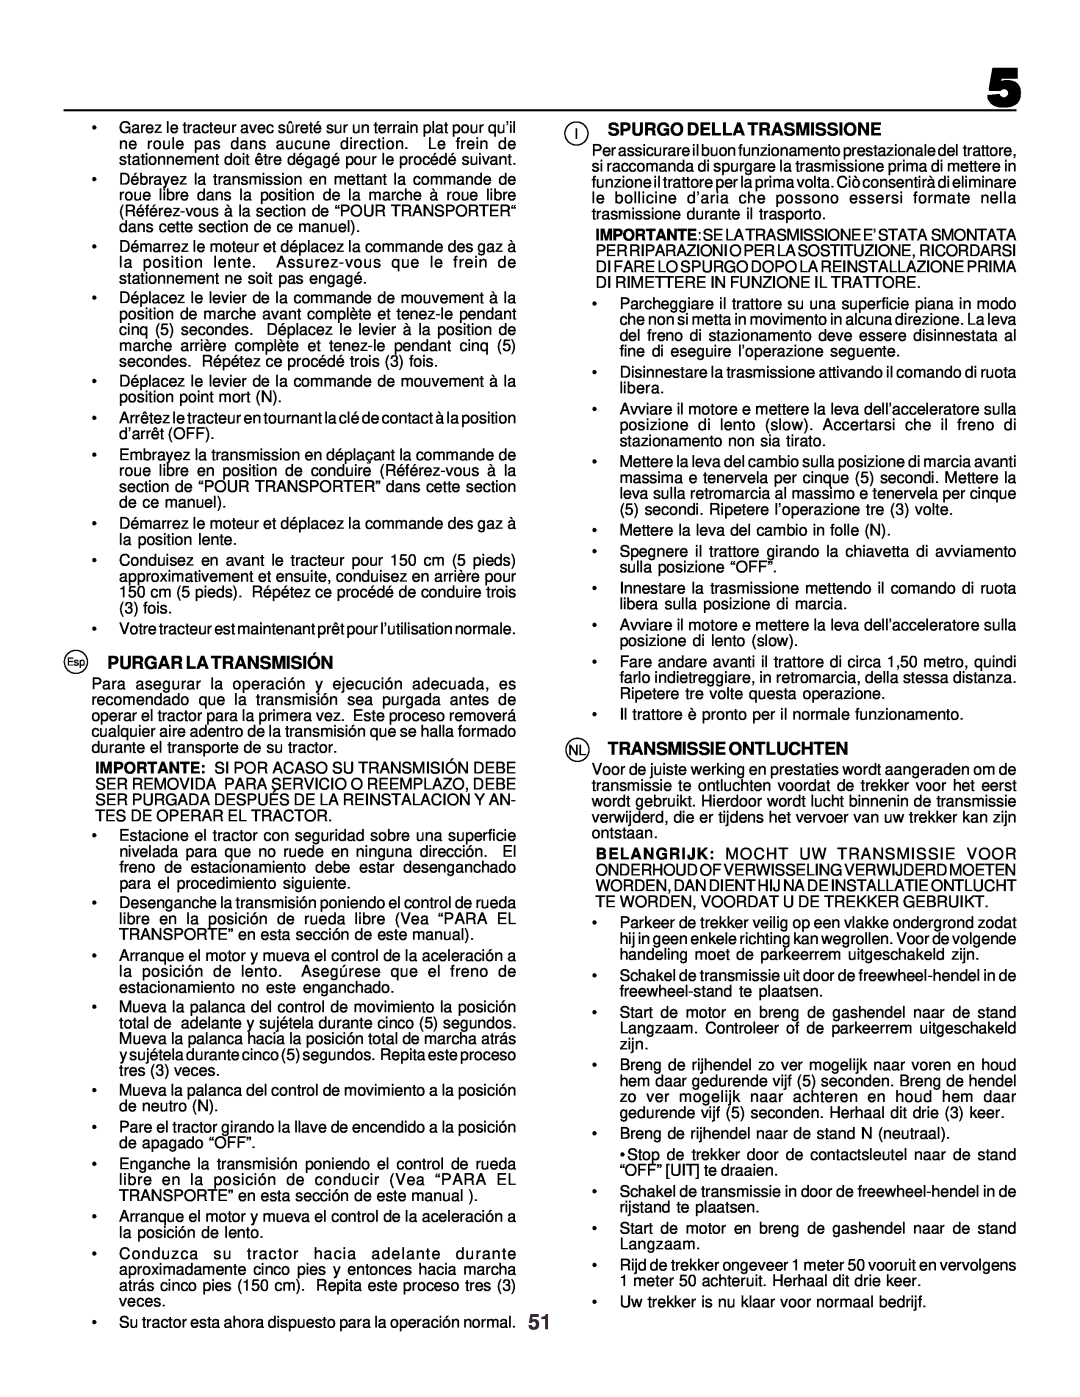 Husqvarna CTH130 instruction manual Esp PURGAR LA TRANSMISIÓ N, I Spurgo Della Trasmissione, Nl Transmissie Ontluchten 